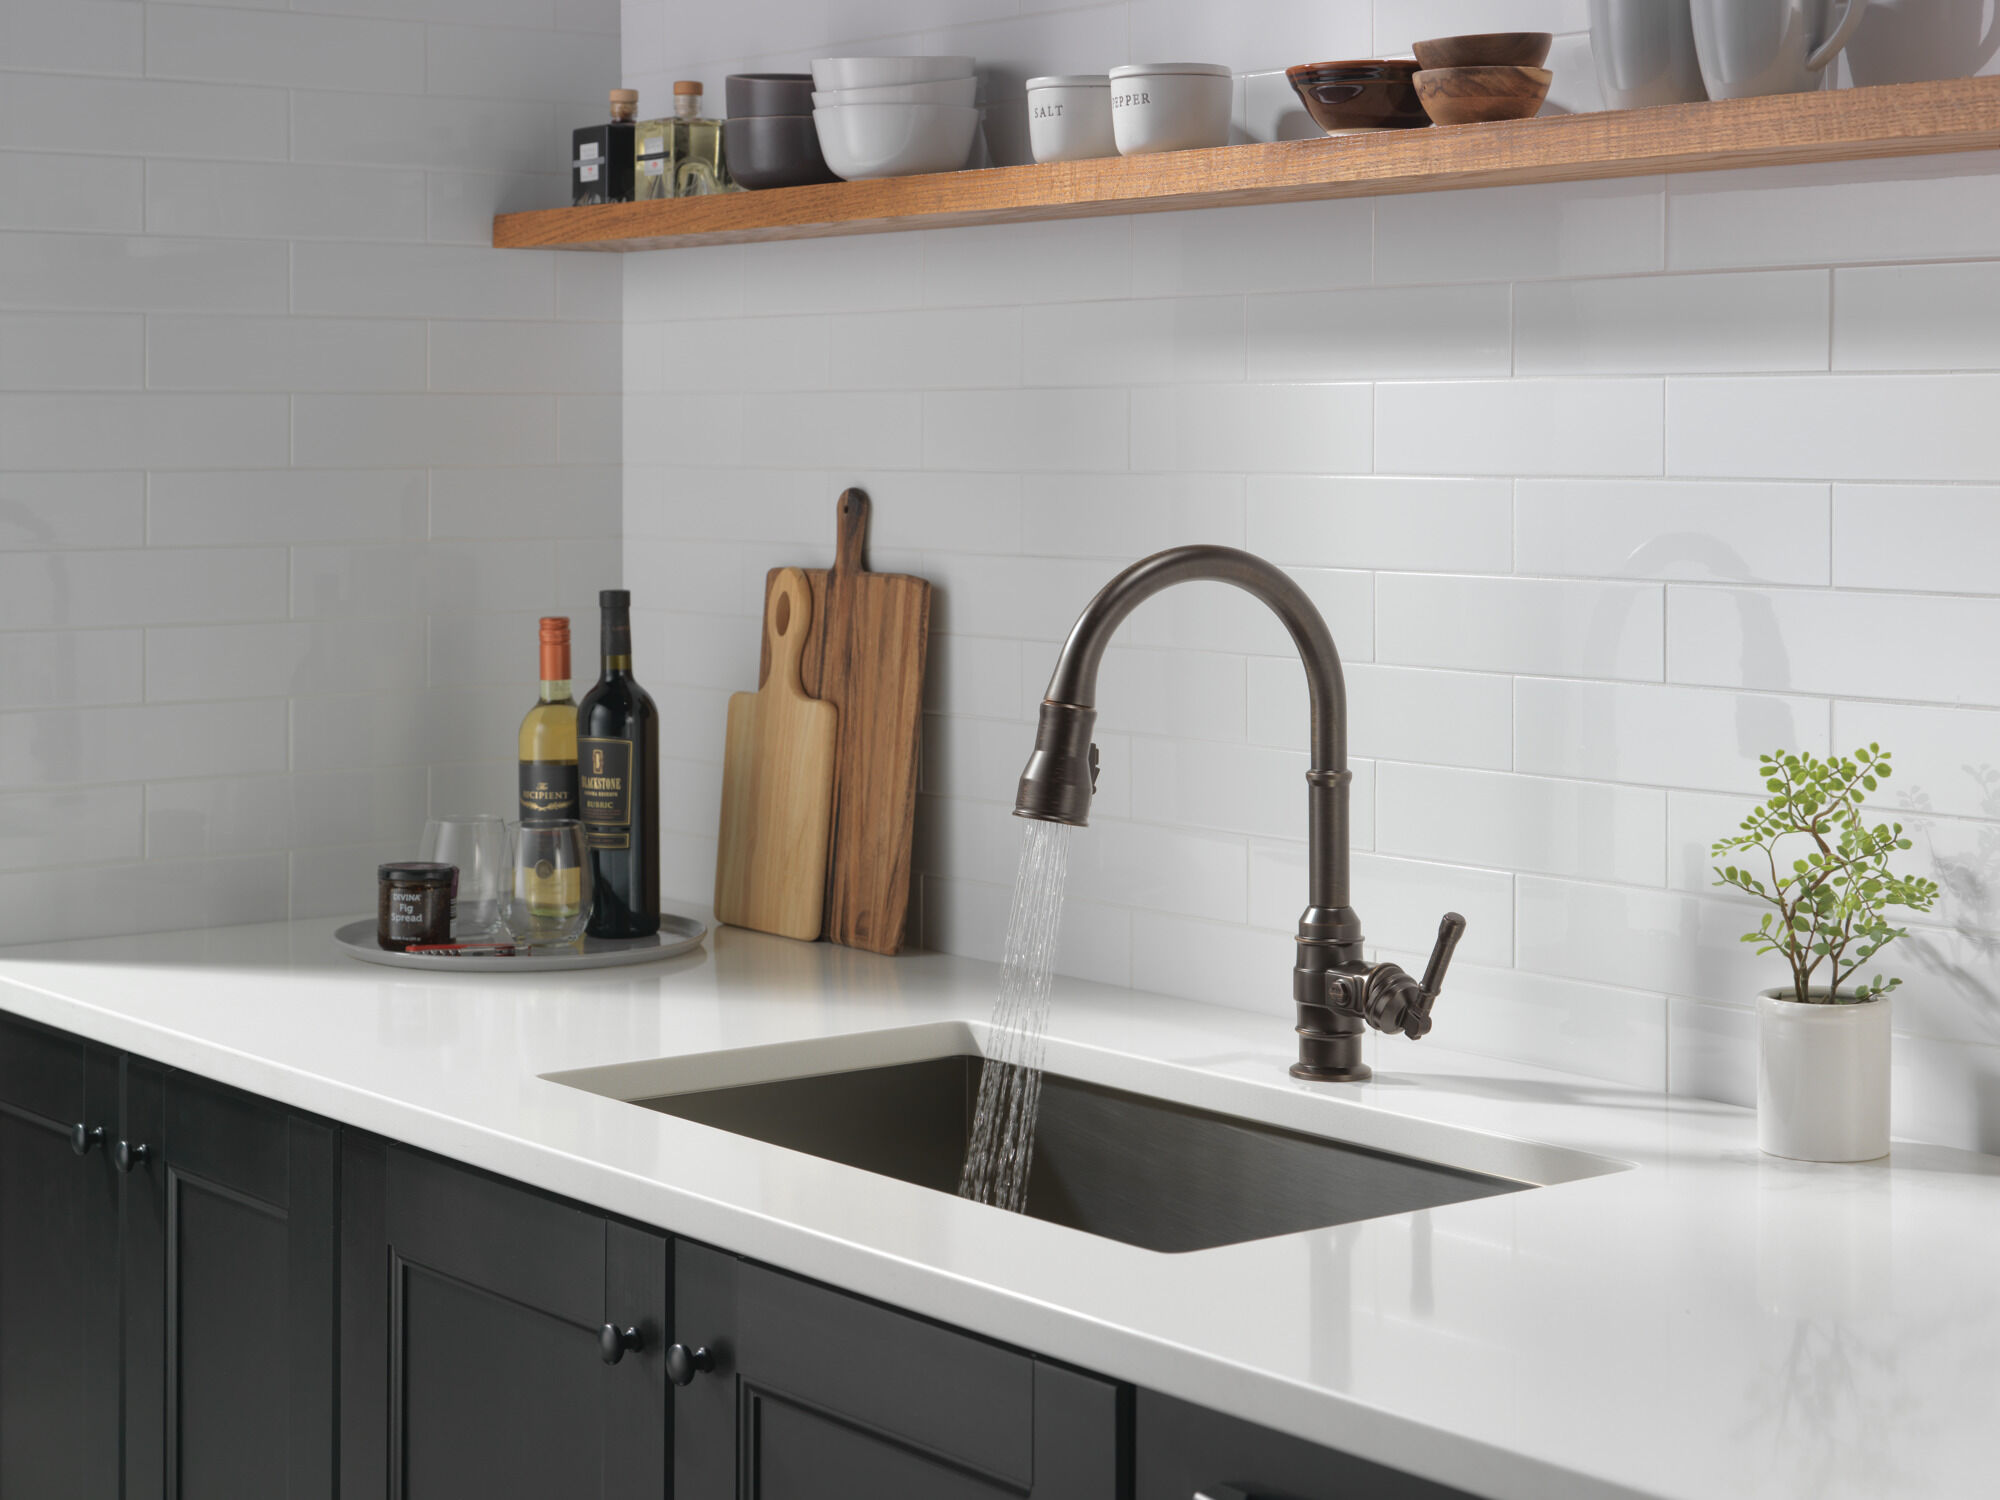 Single Handle Pull-Down Kitchen Faucet in Venetian Bronze 9190-RB 